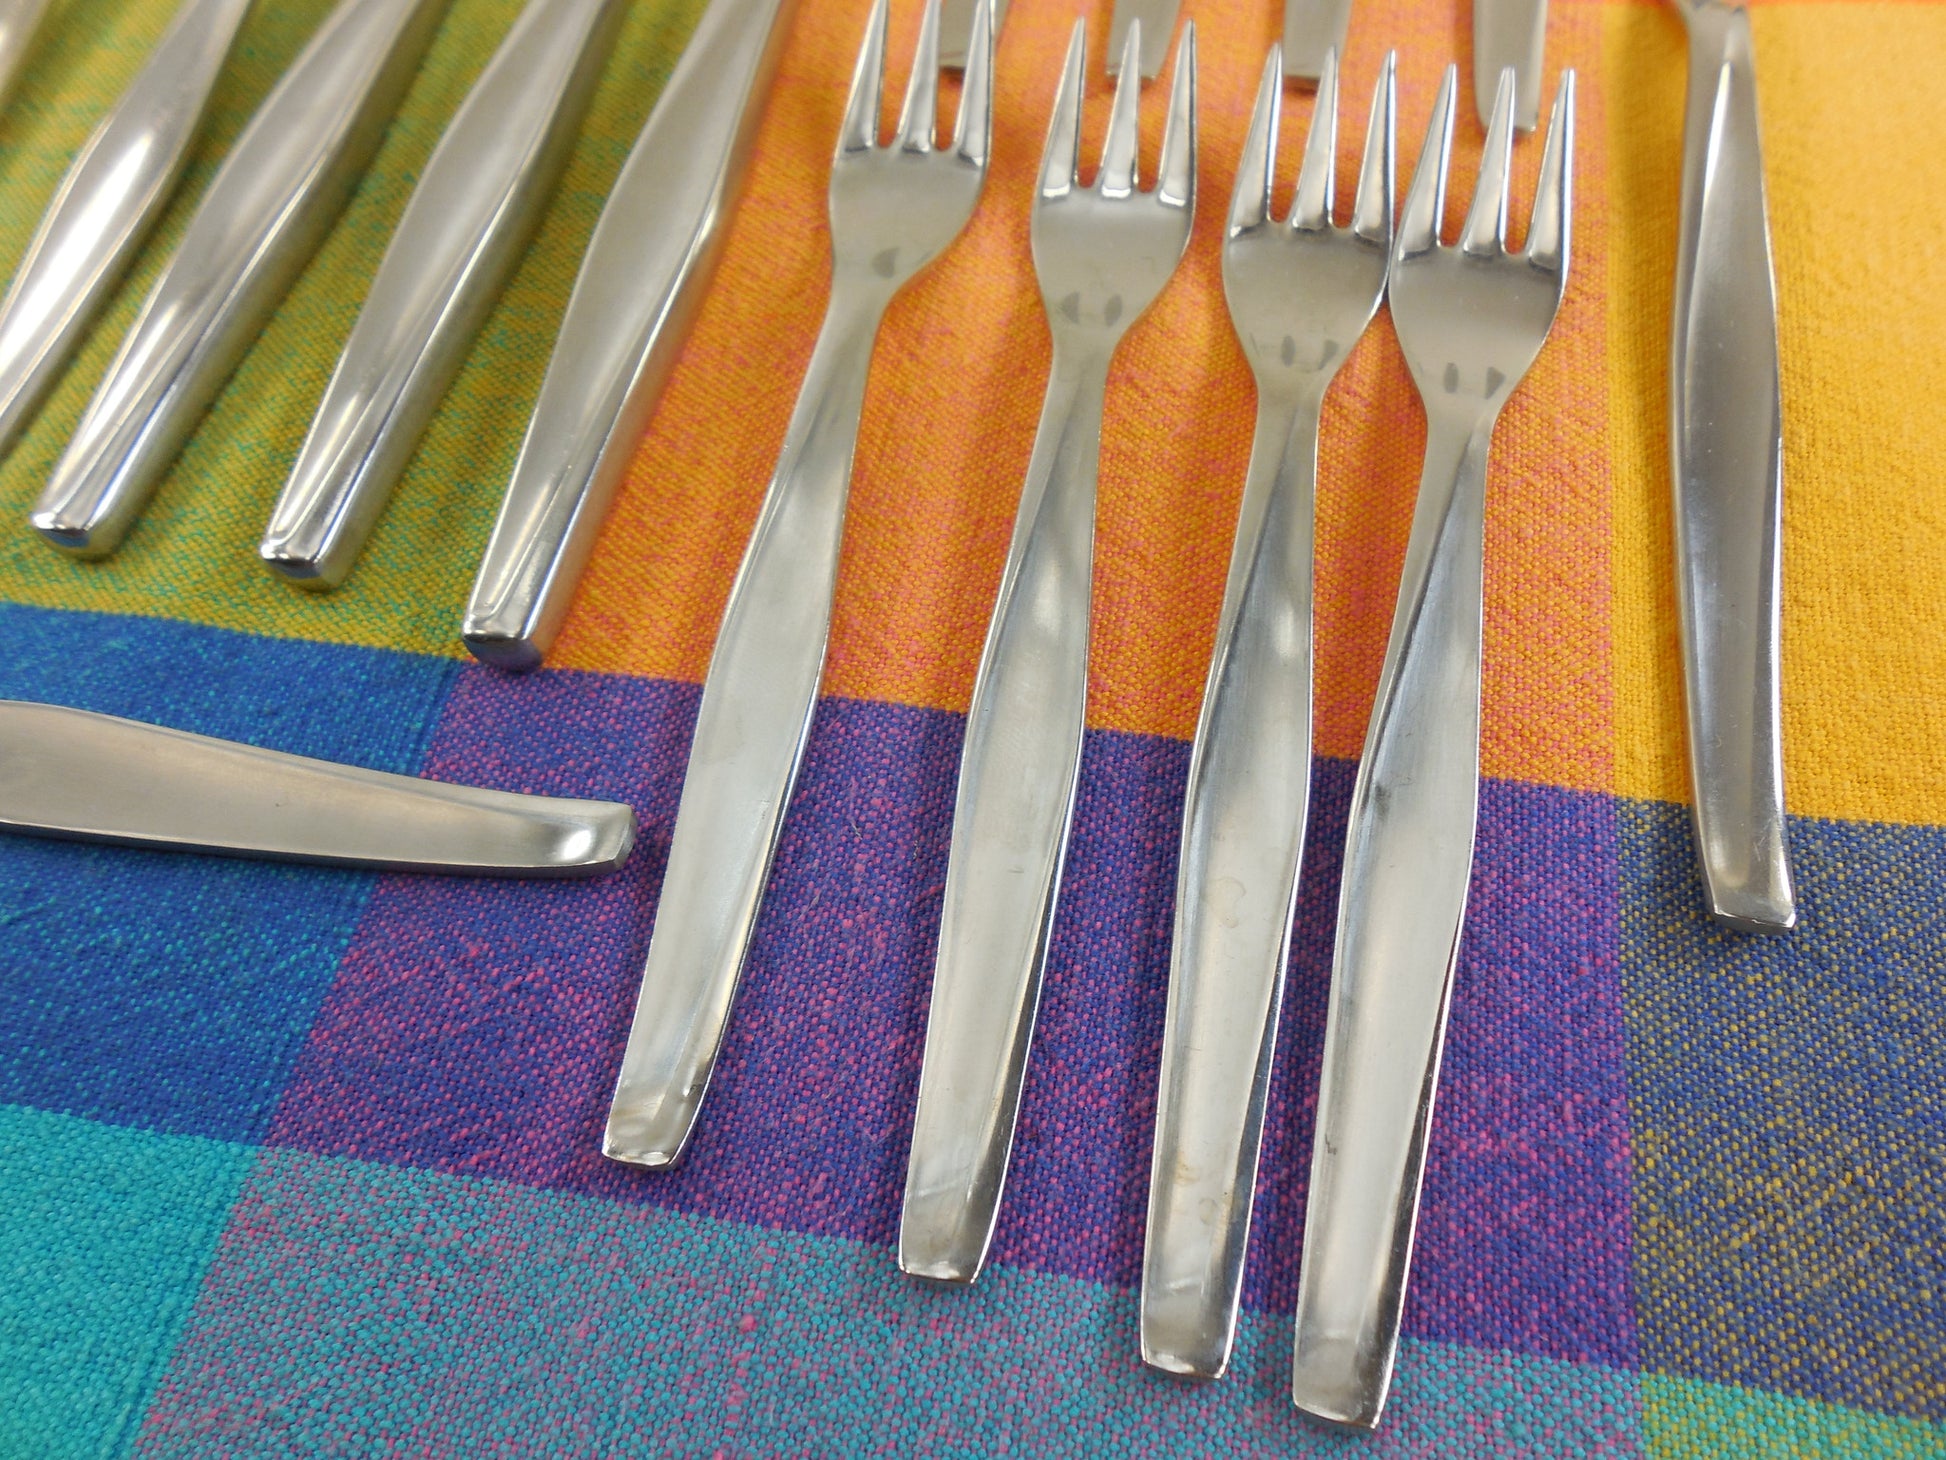 Herbert Gosebrink HGS Solingen Germany - Modern Flatware Lot Stainless Knife Fork Spoon forks